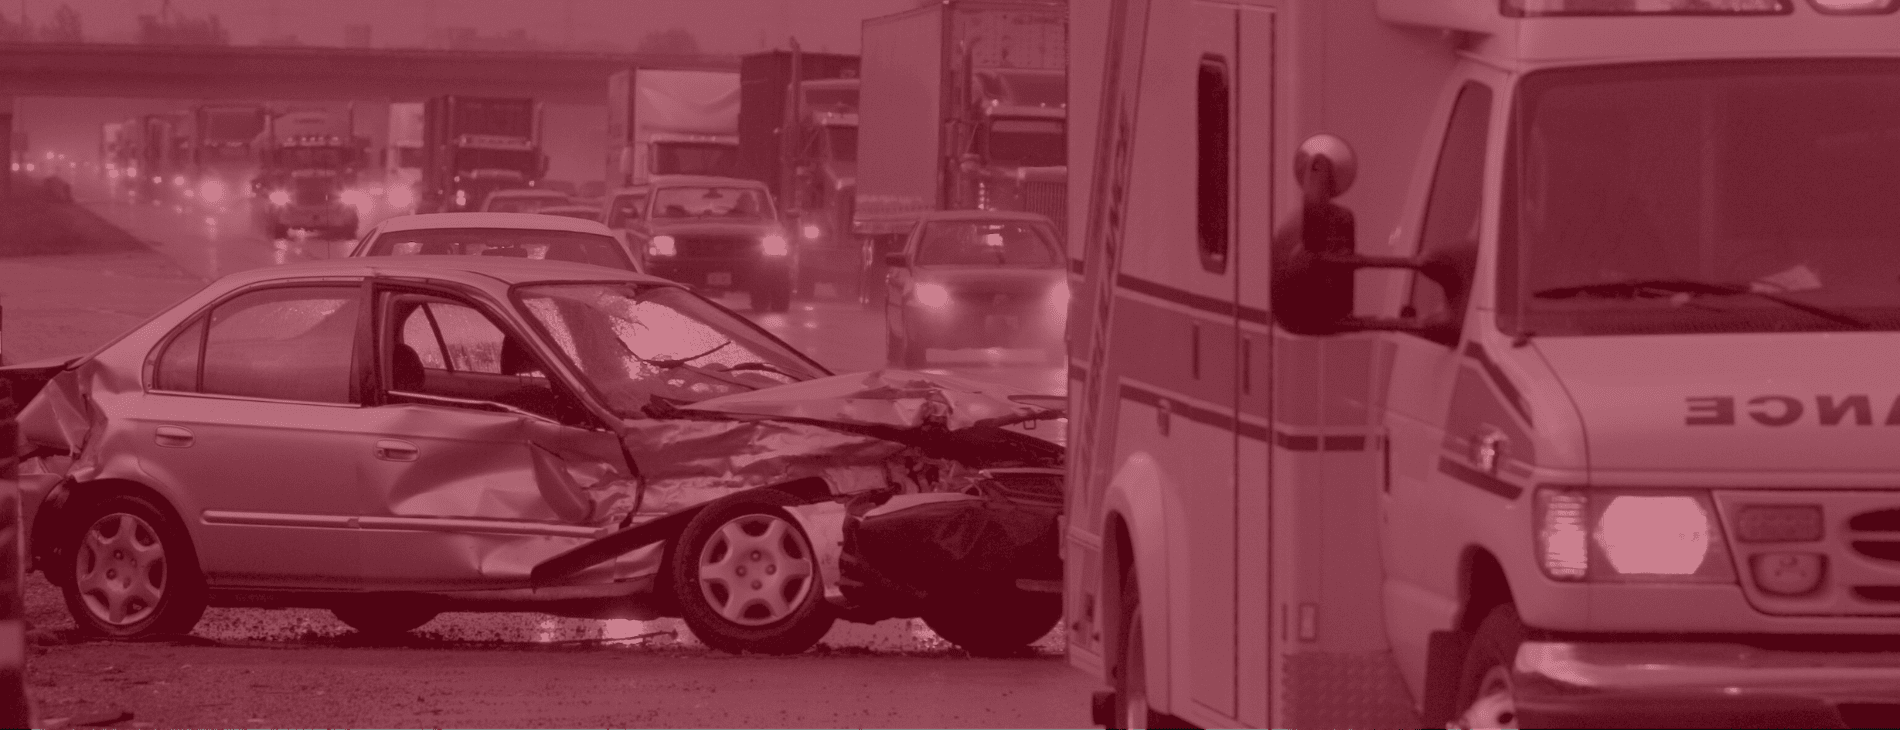 Martinez DUI crash